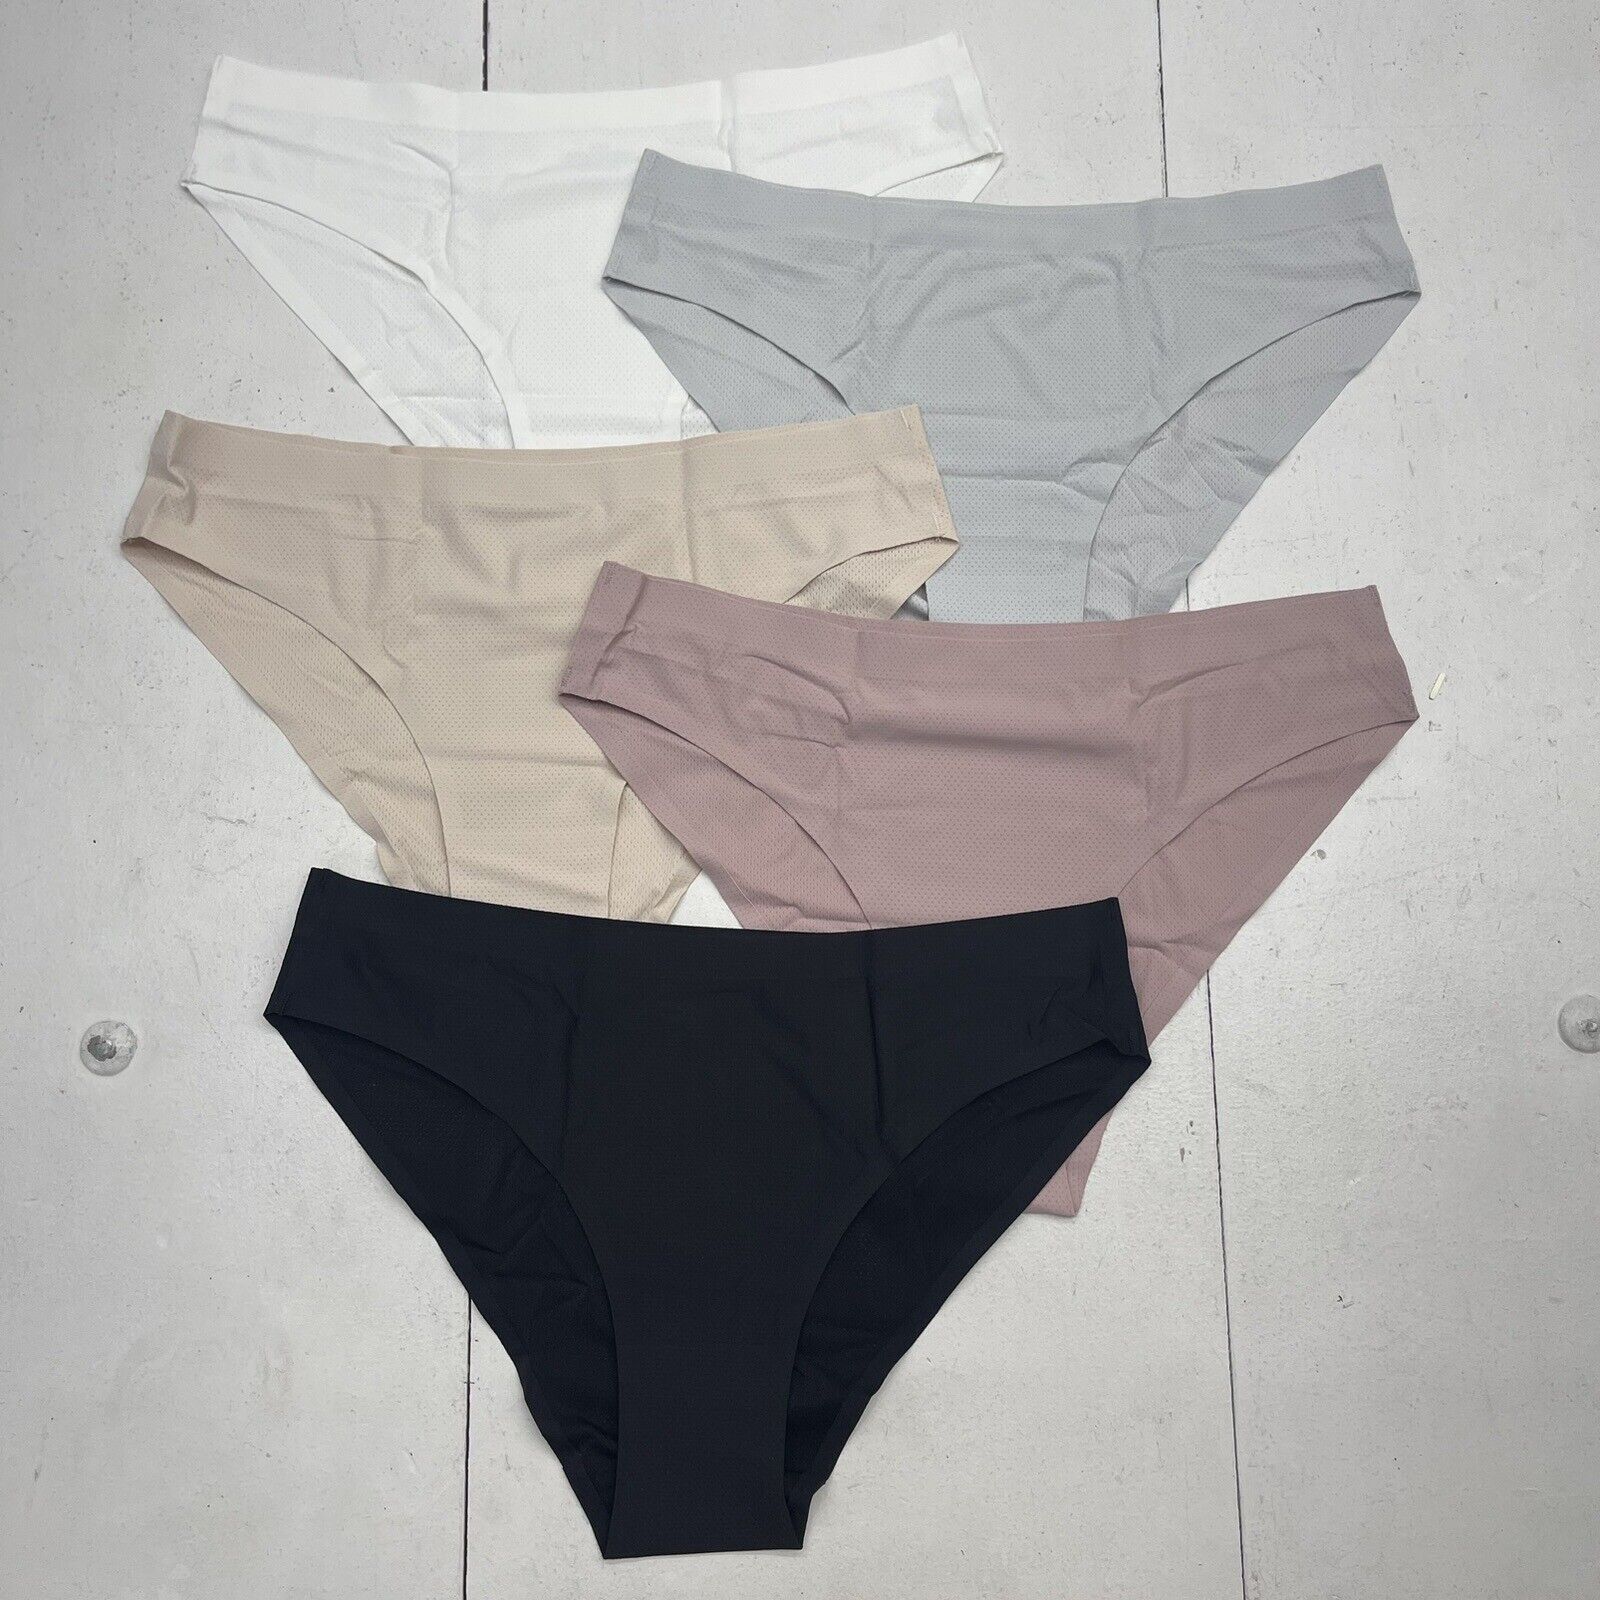 Jaywan 5 Pack Seamless Underwear Multicolored Women's Size Medium New -  beyond exchange